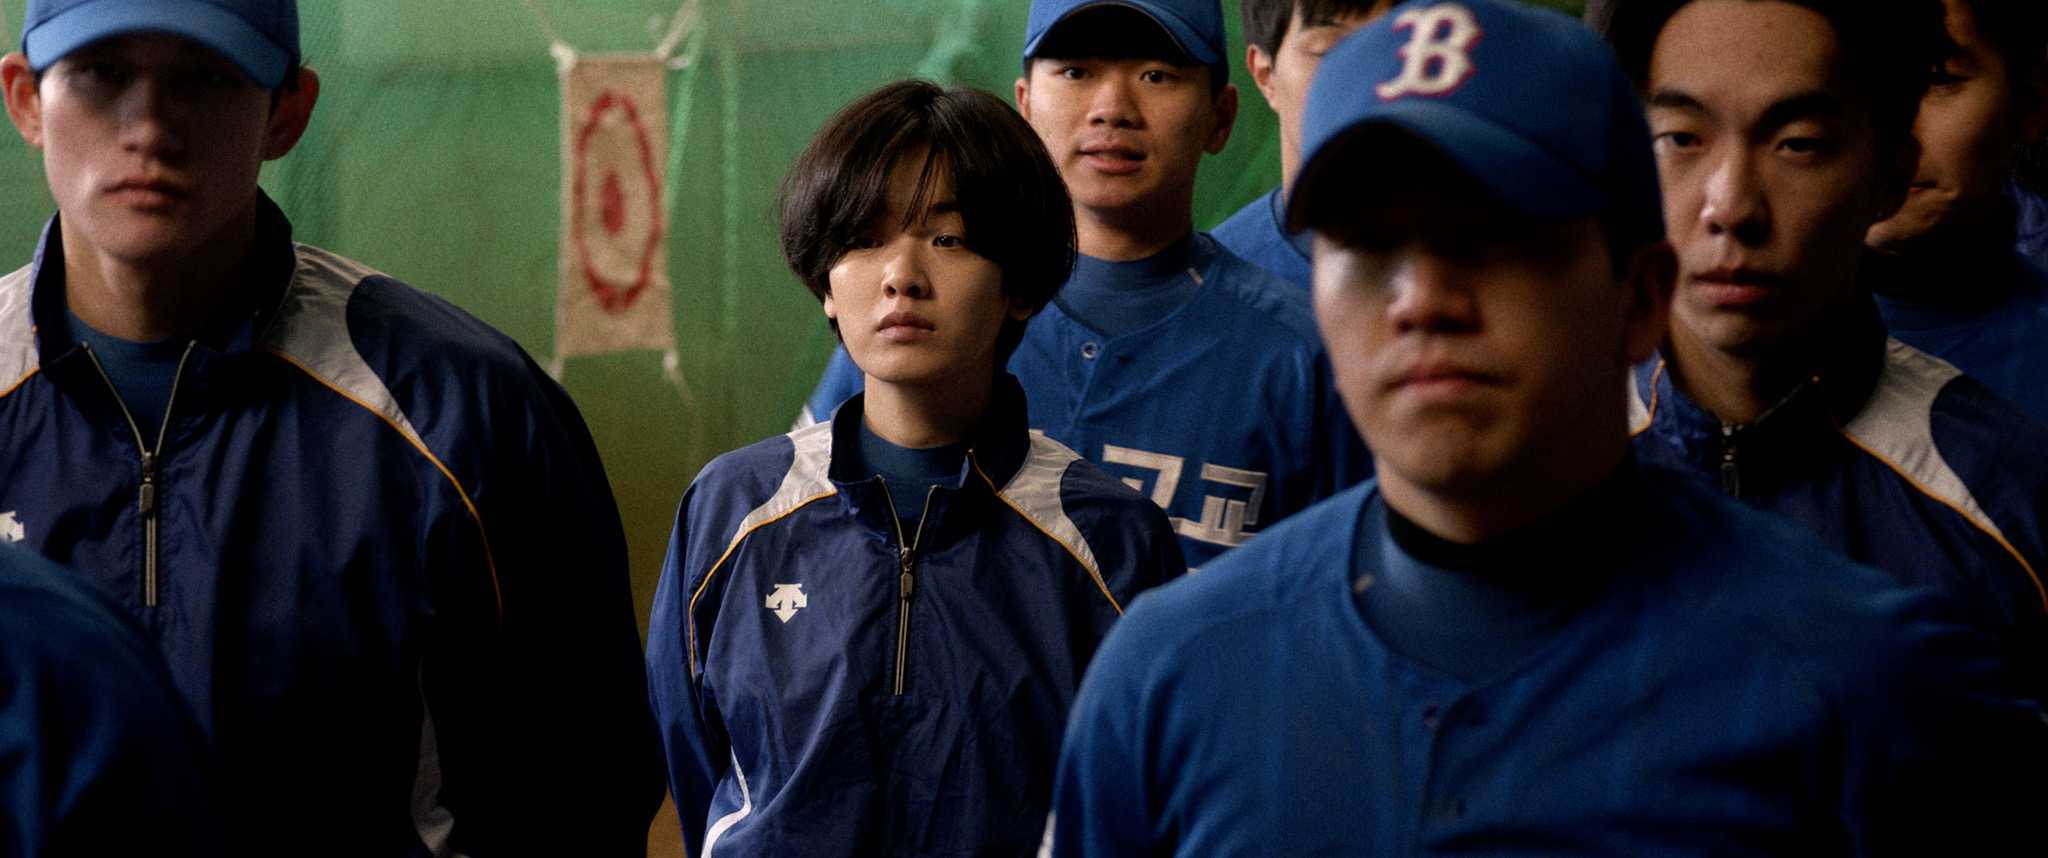 Film Review: Baseball Girl (2020) by Choi Yoon-tae